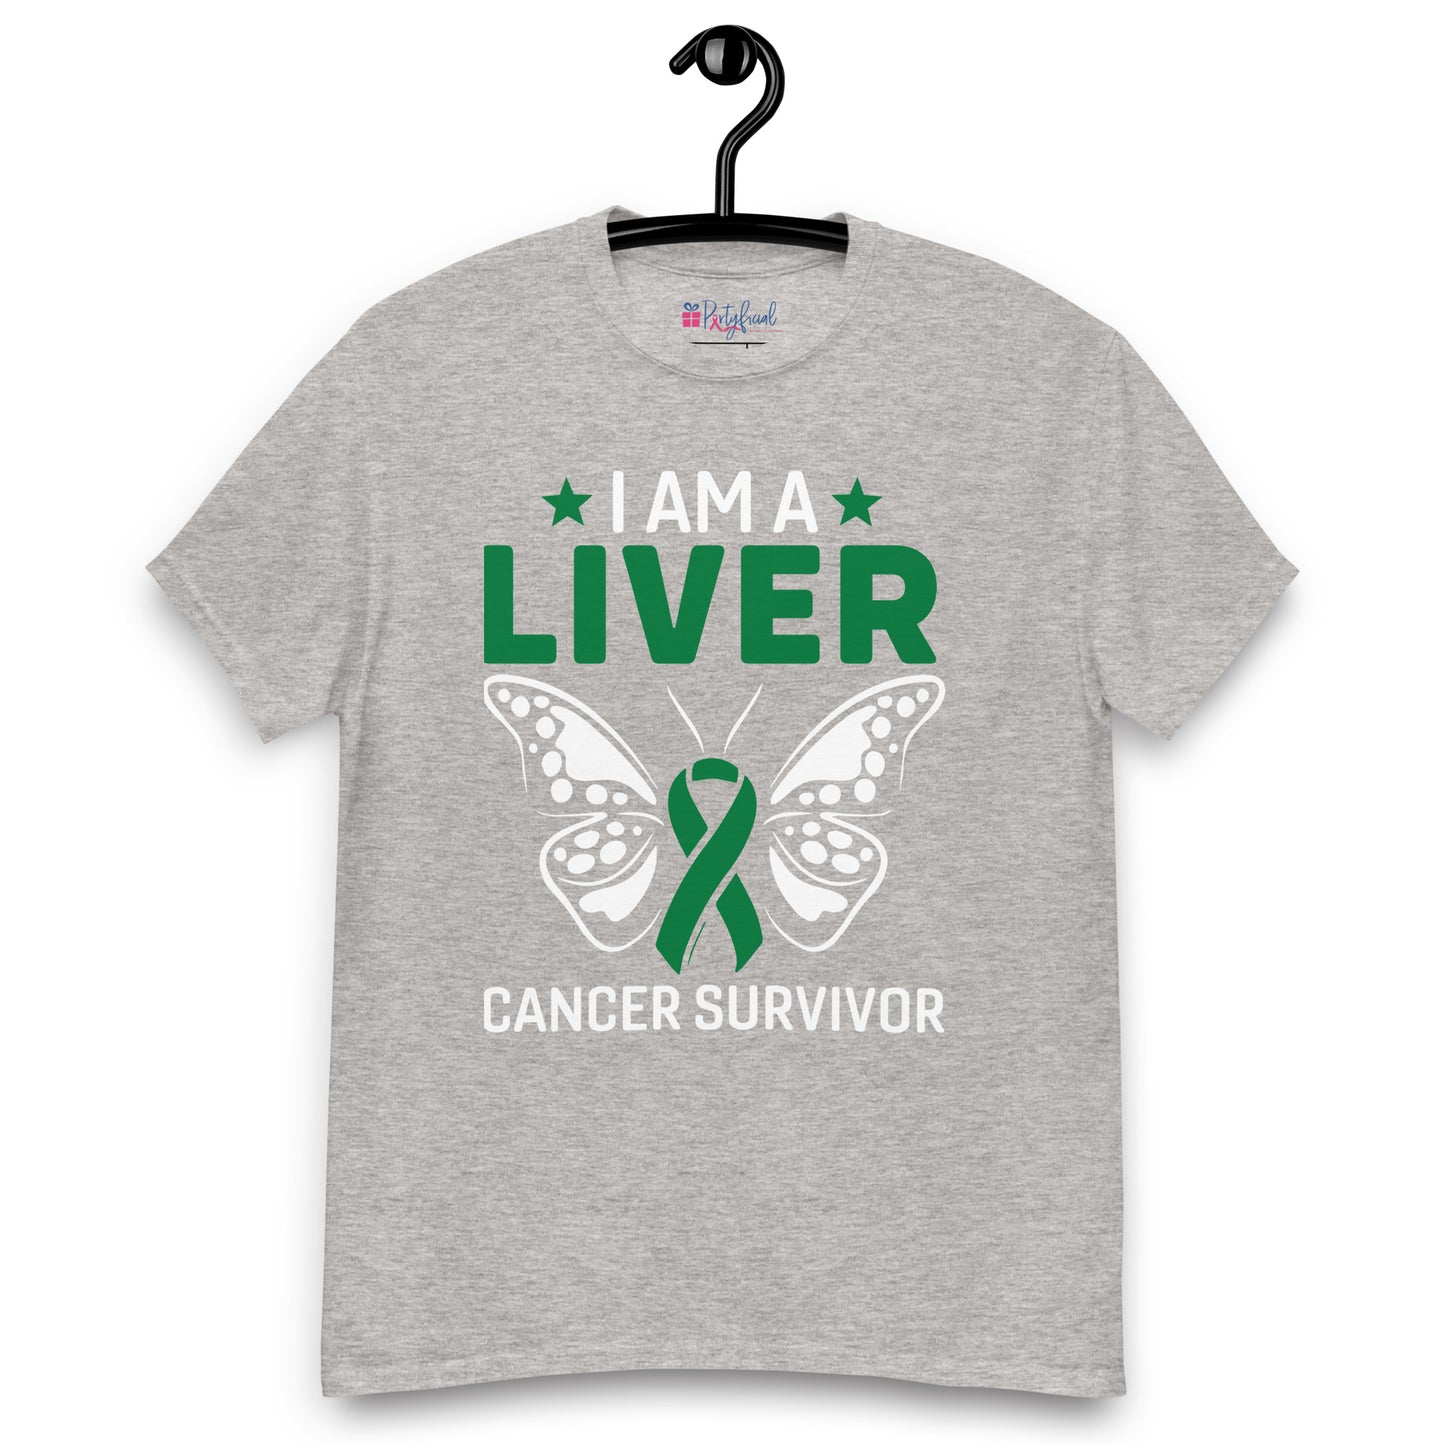 Liver Cancer Survivor tee